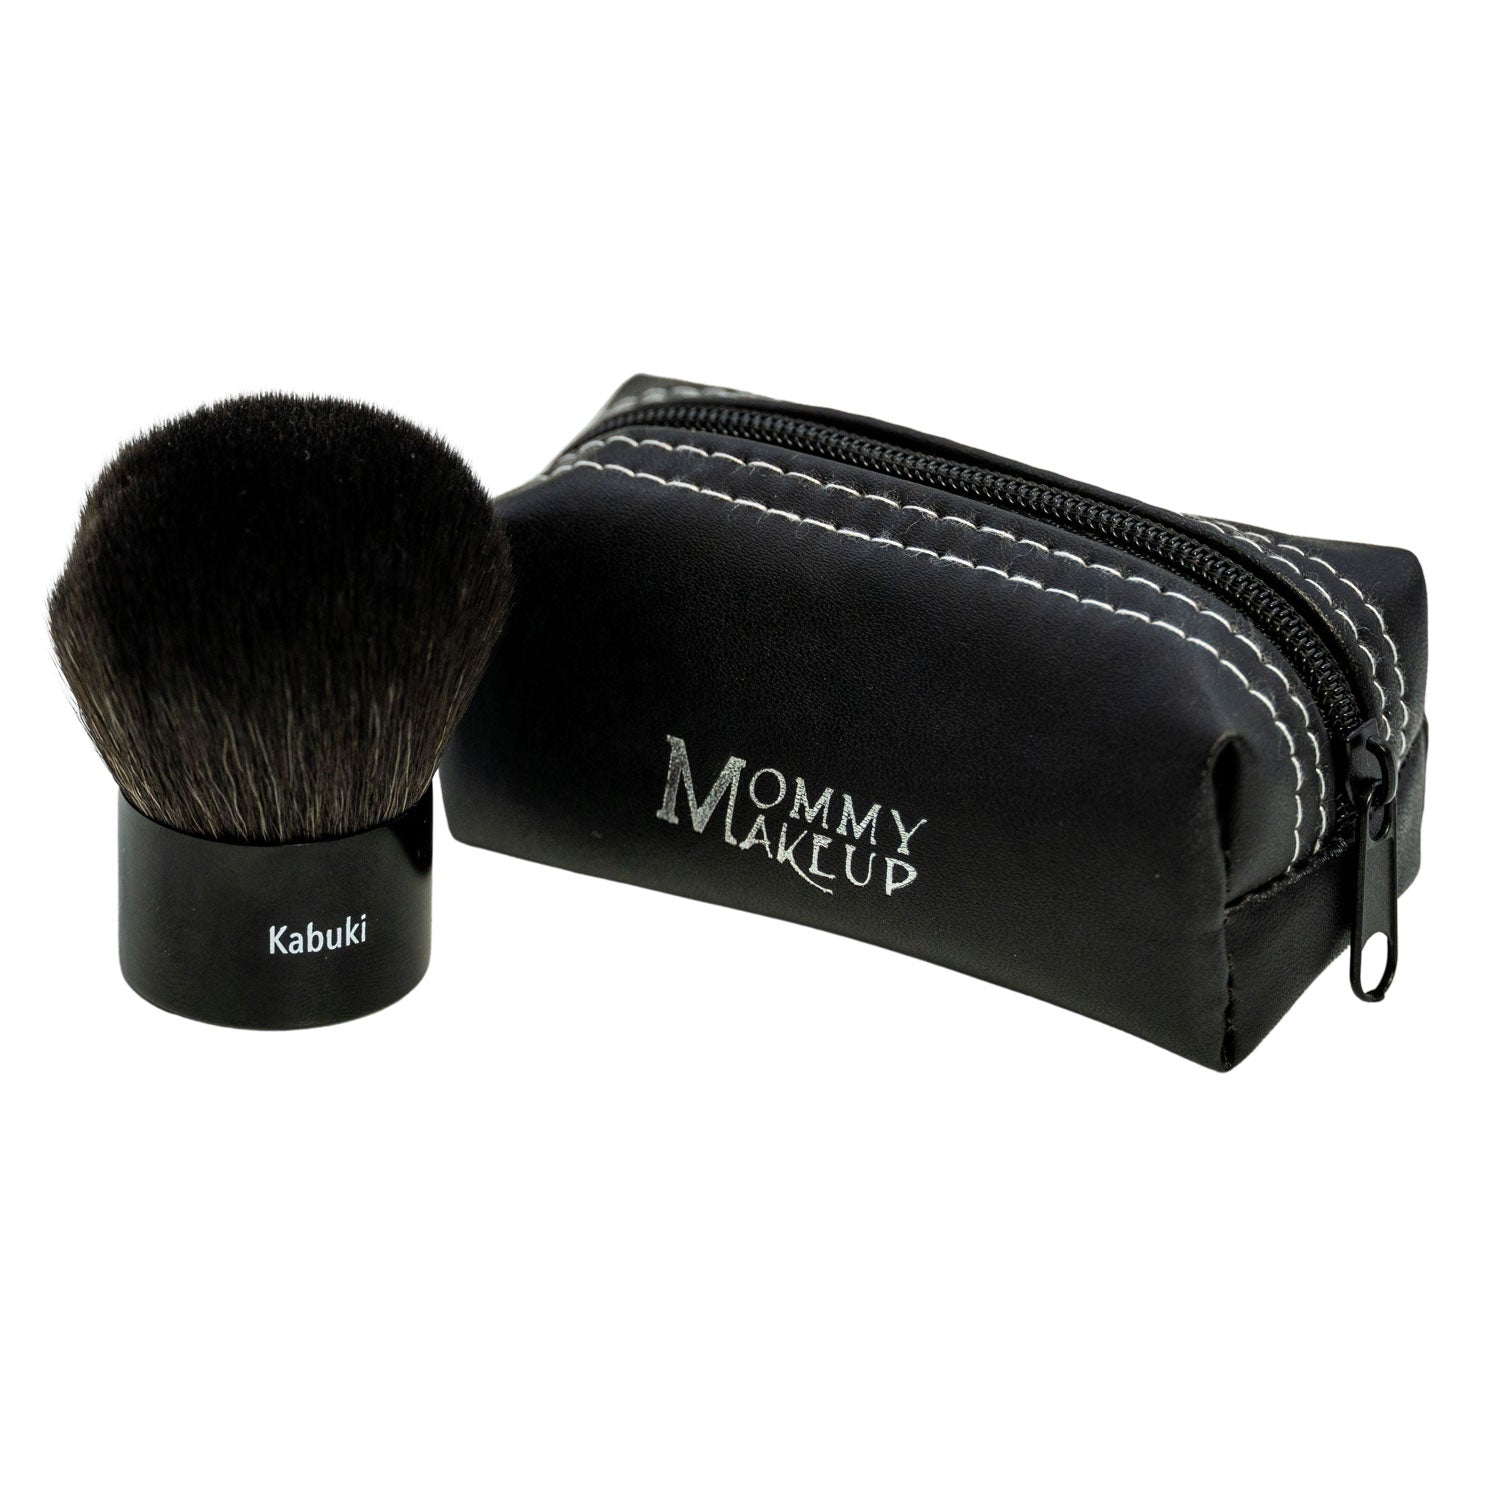 Mommy Makeup Kabuki Brush with premium synthetic (vegan) bristles and cute travel-friendly bag